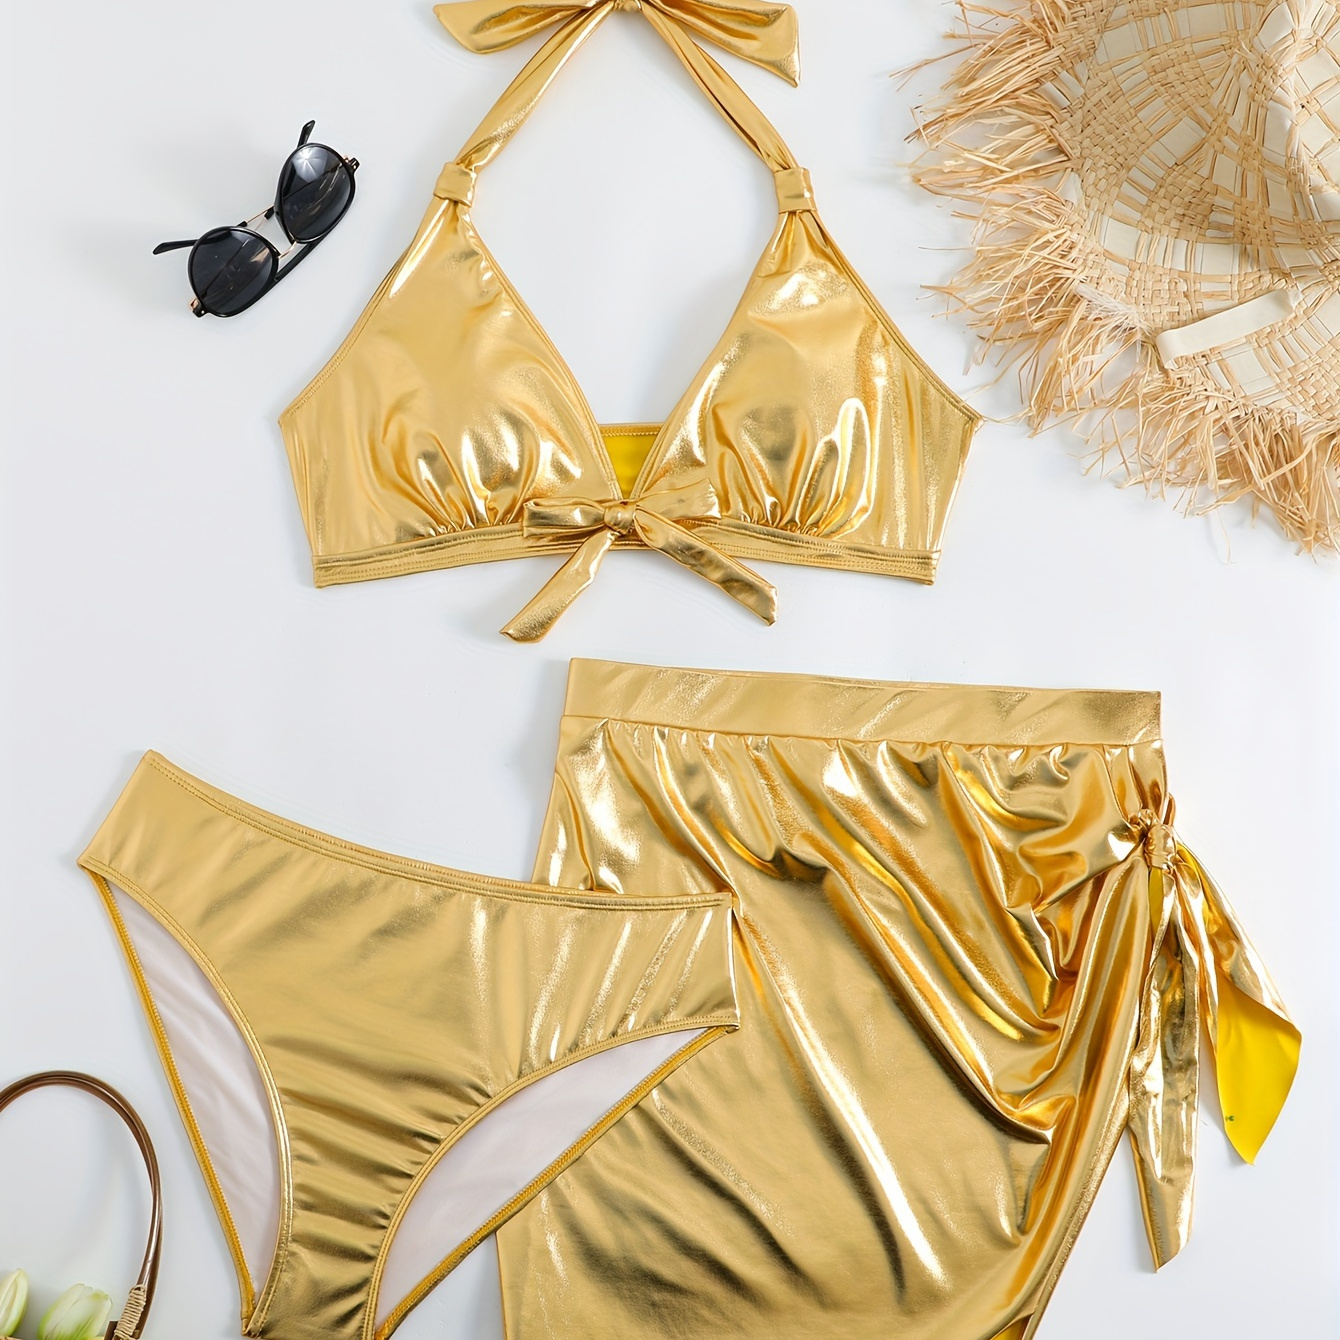 

Women's Plus Size 3-piece Bikini Swimwear Set, Metallic Golden Fabric, Vacation Style, Tie-front Top With High Cut Bottoms